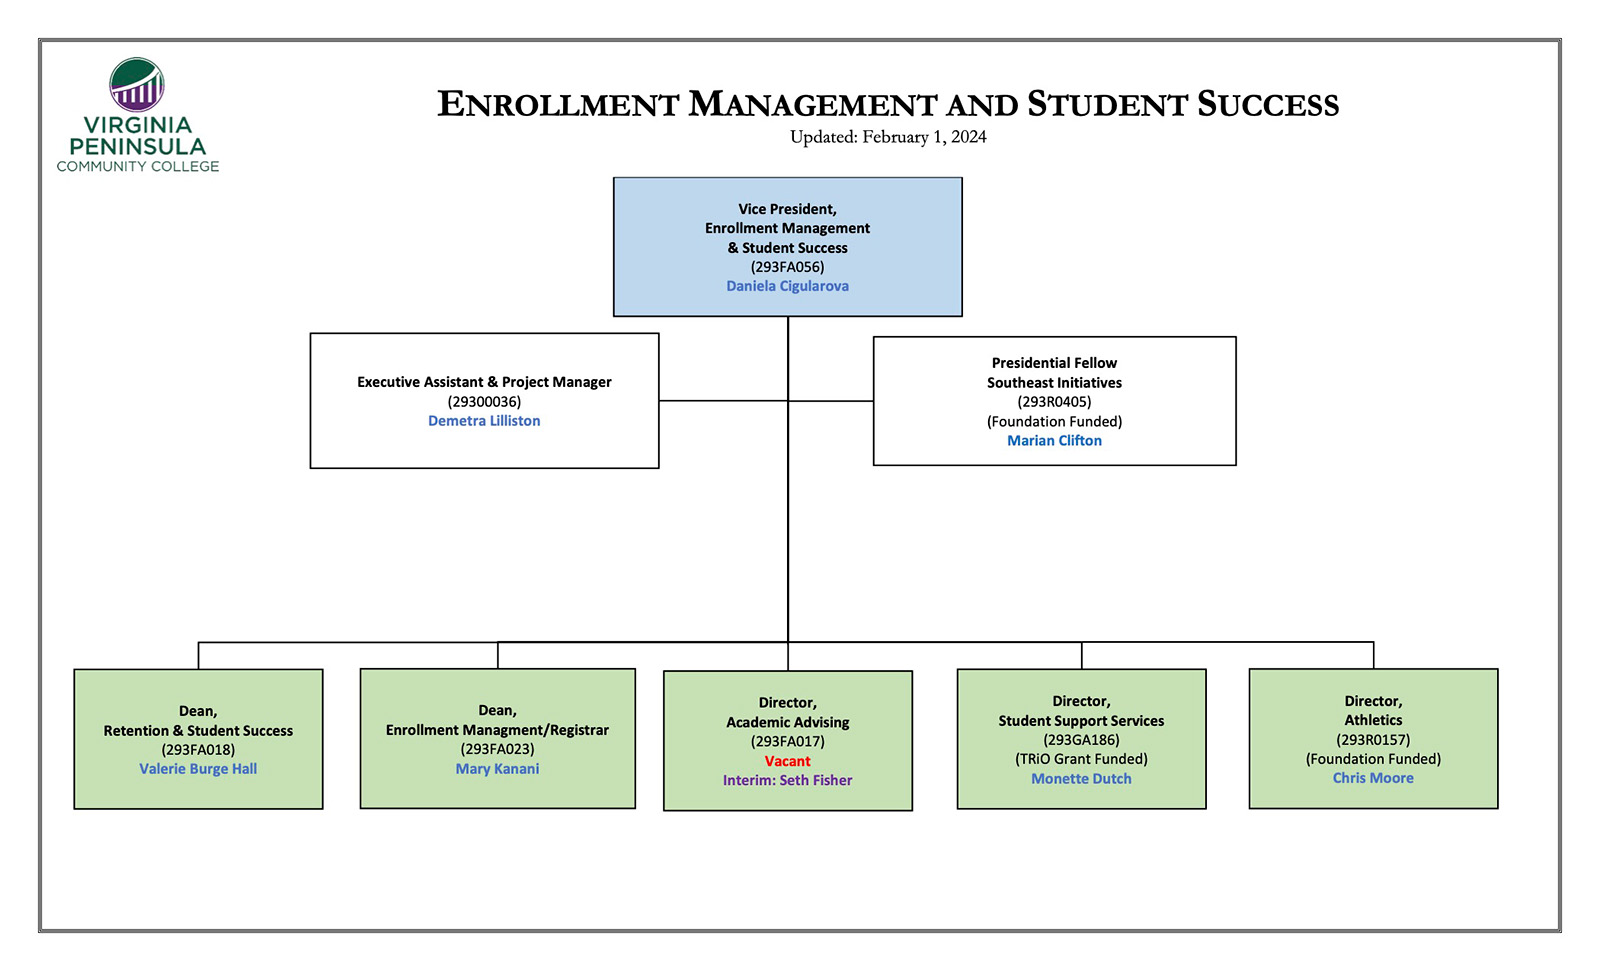 ENROLLMENT MANAGEMENT AND STUDENT SUCCESS Org Chart